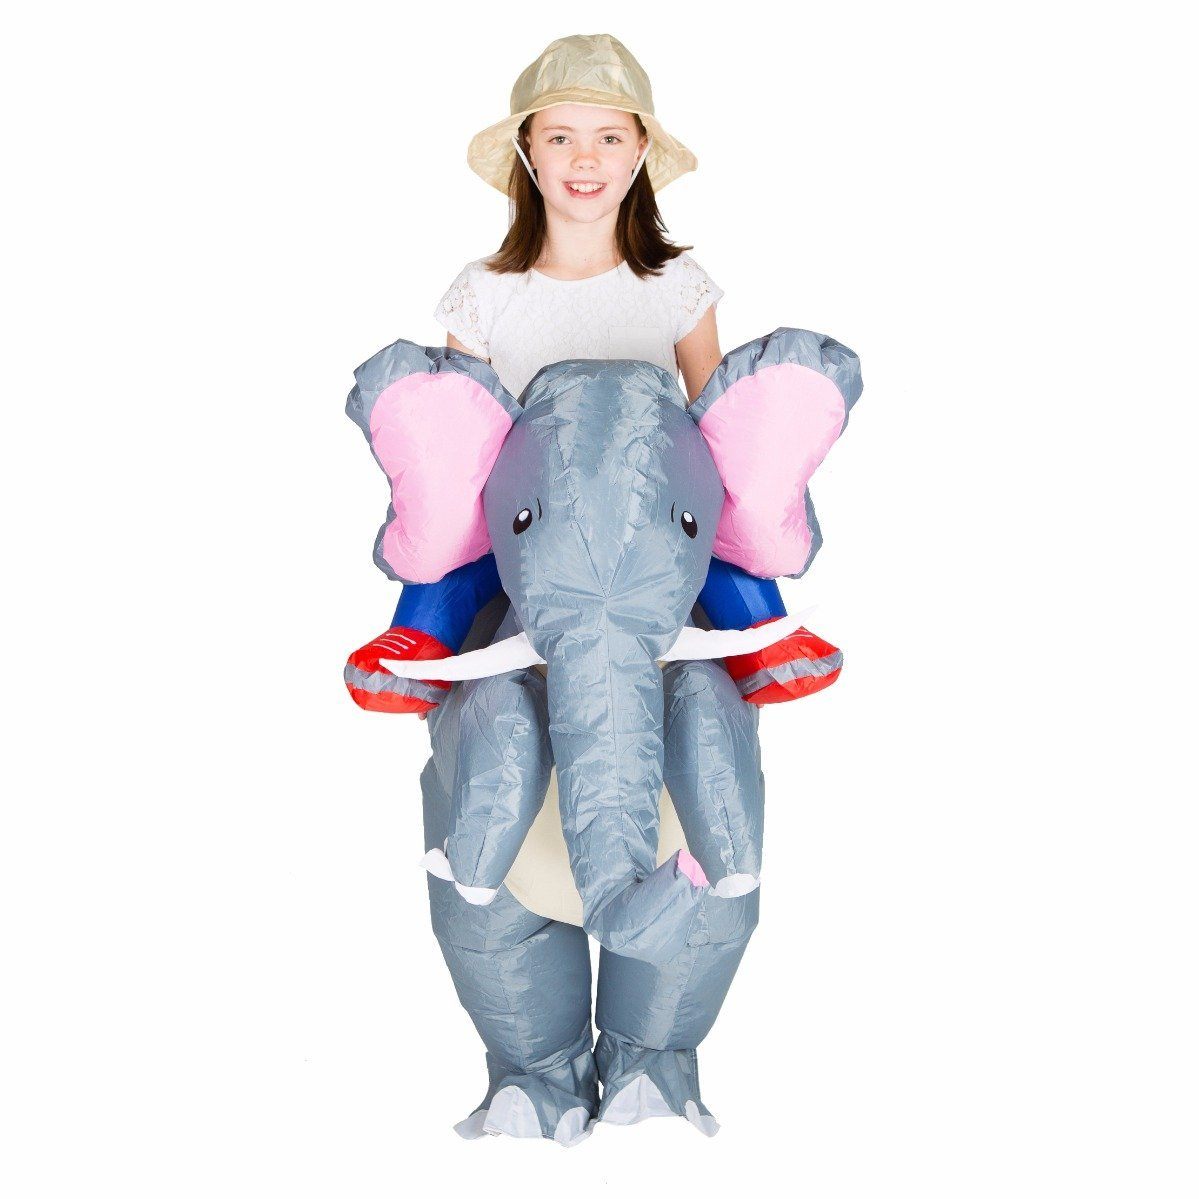 Fancy Dress - Kids Inflatable Elephant Costume